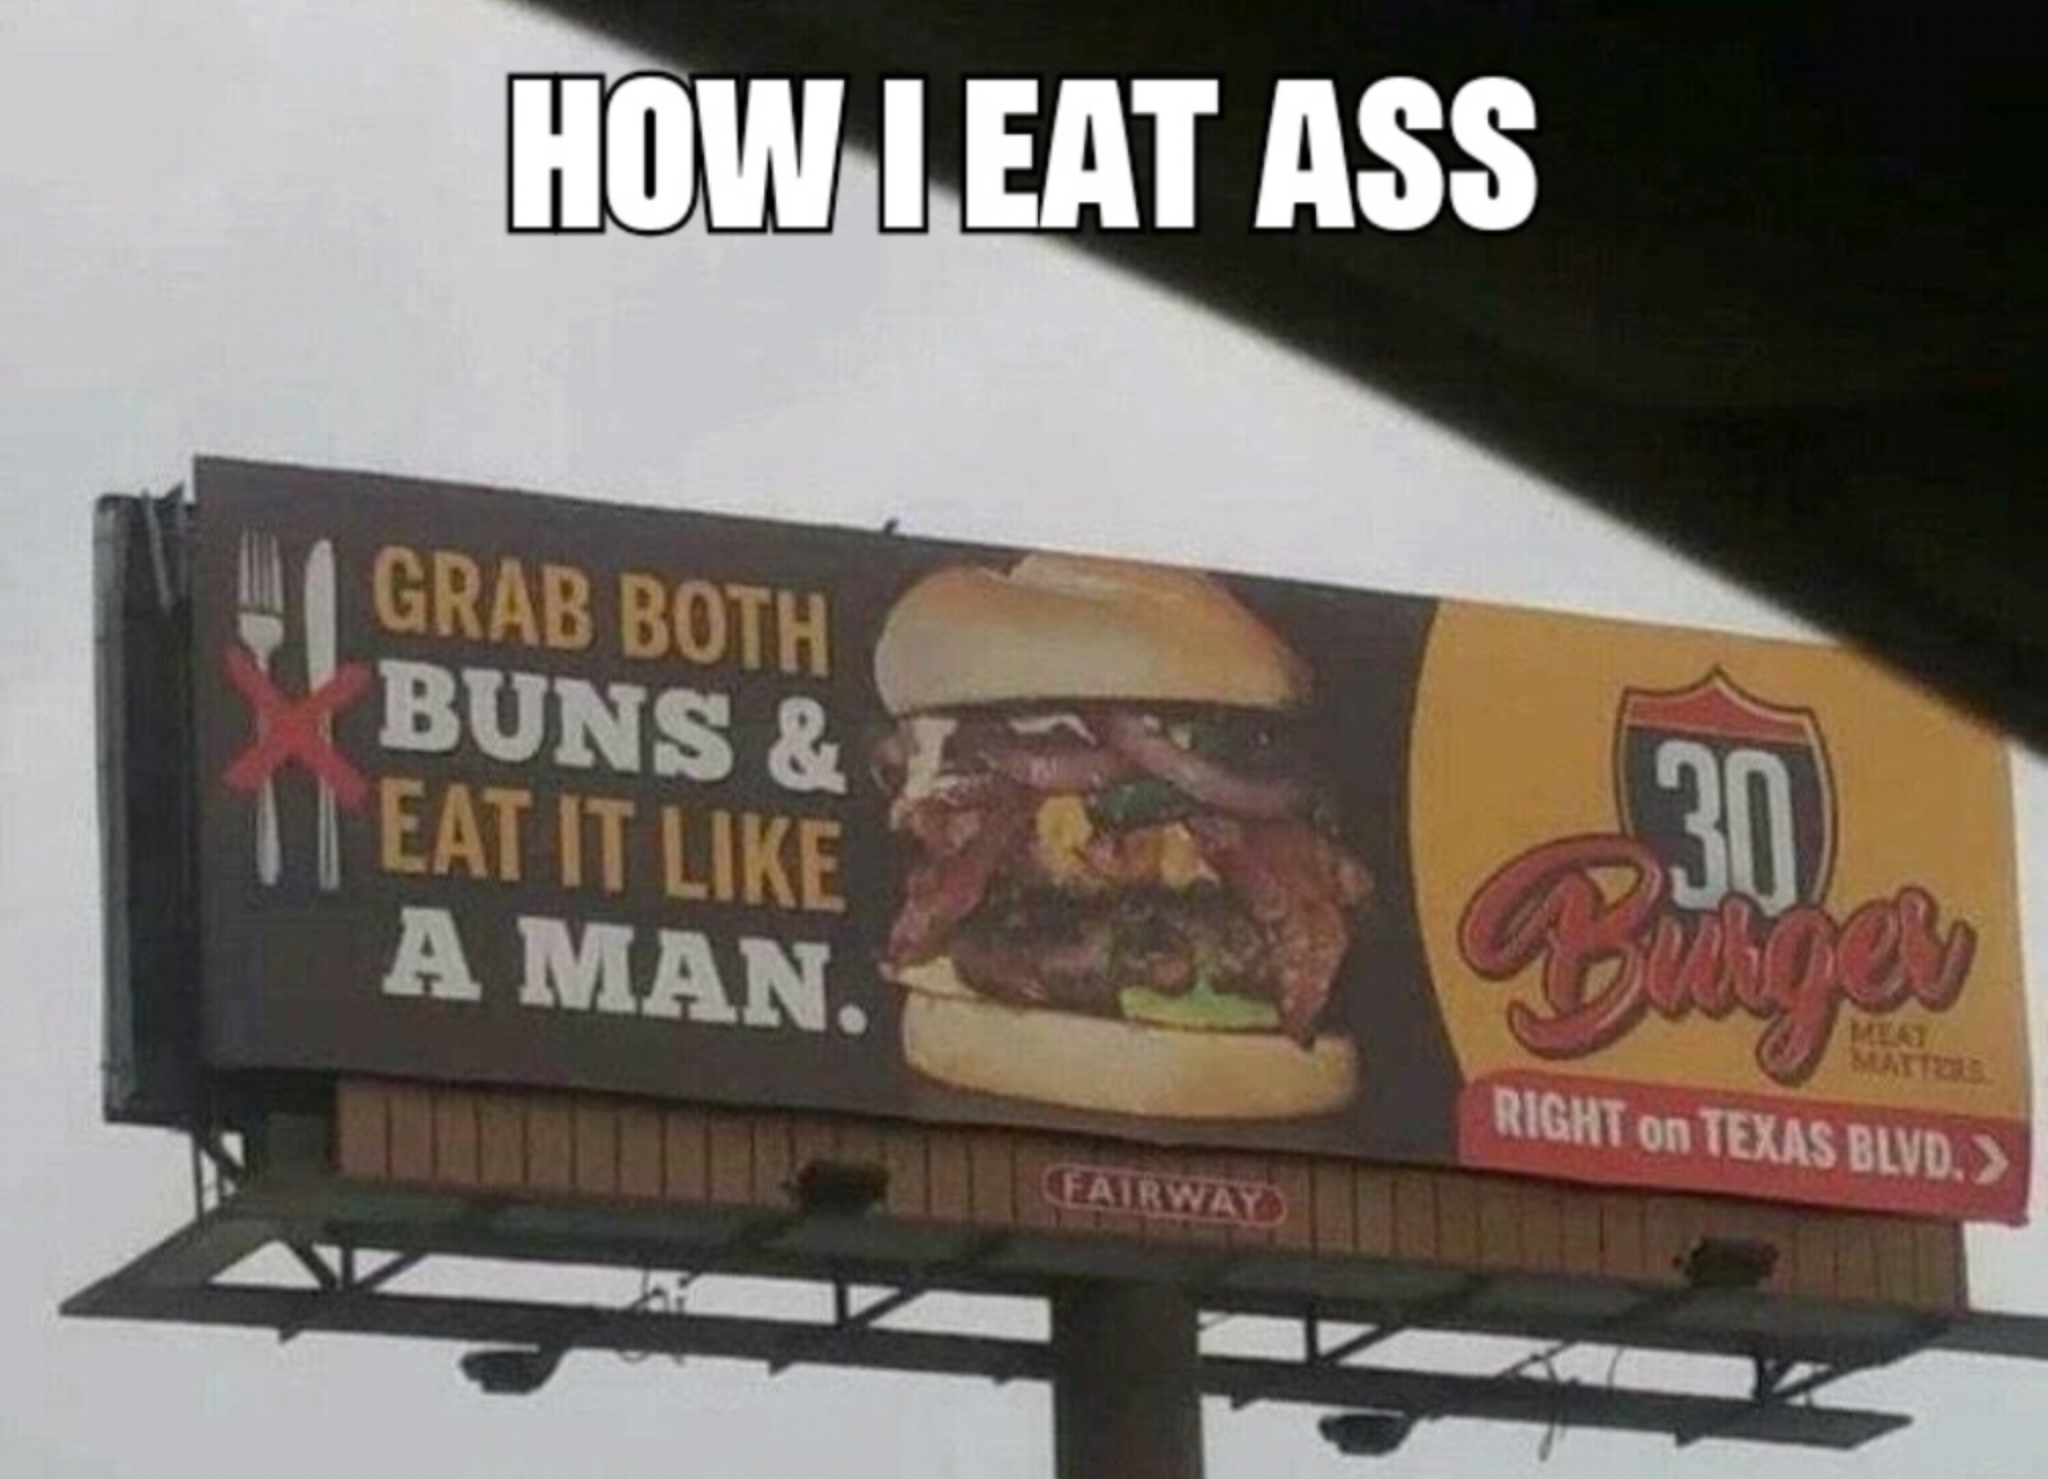 eat ass like a man meme - How I Eat Ass Grab Both Buns & Eat It A Man. Leat Right on Texas Blvd.> Fairway